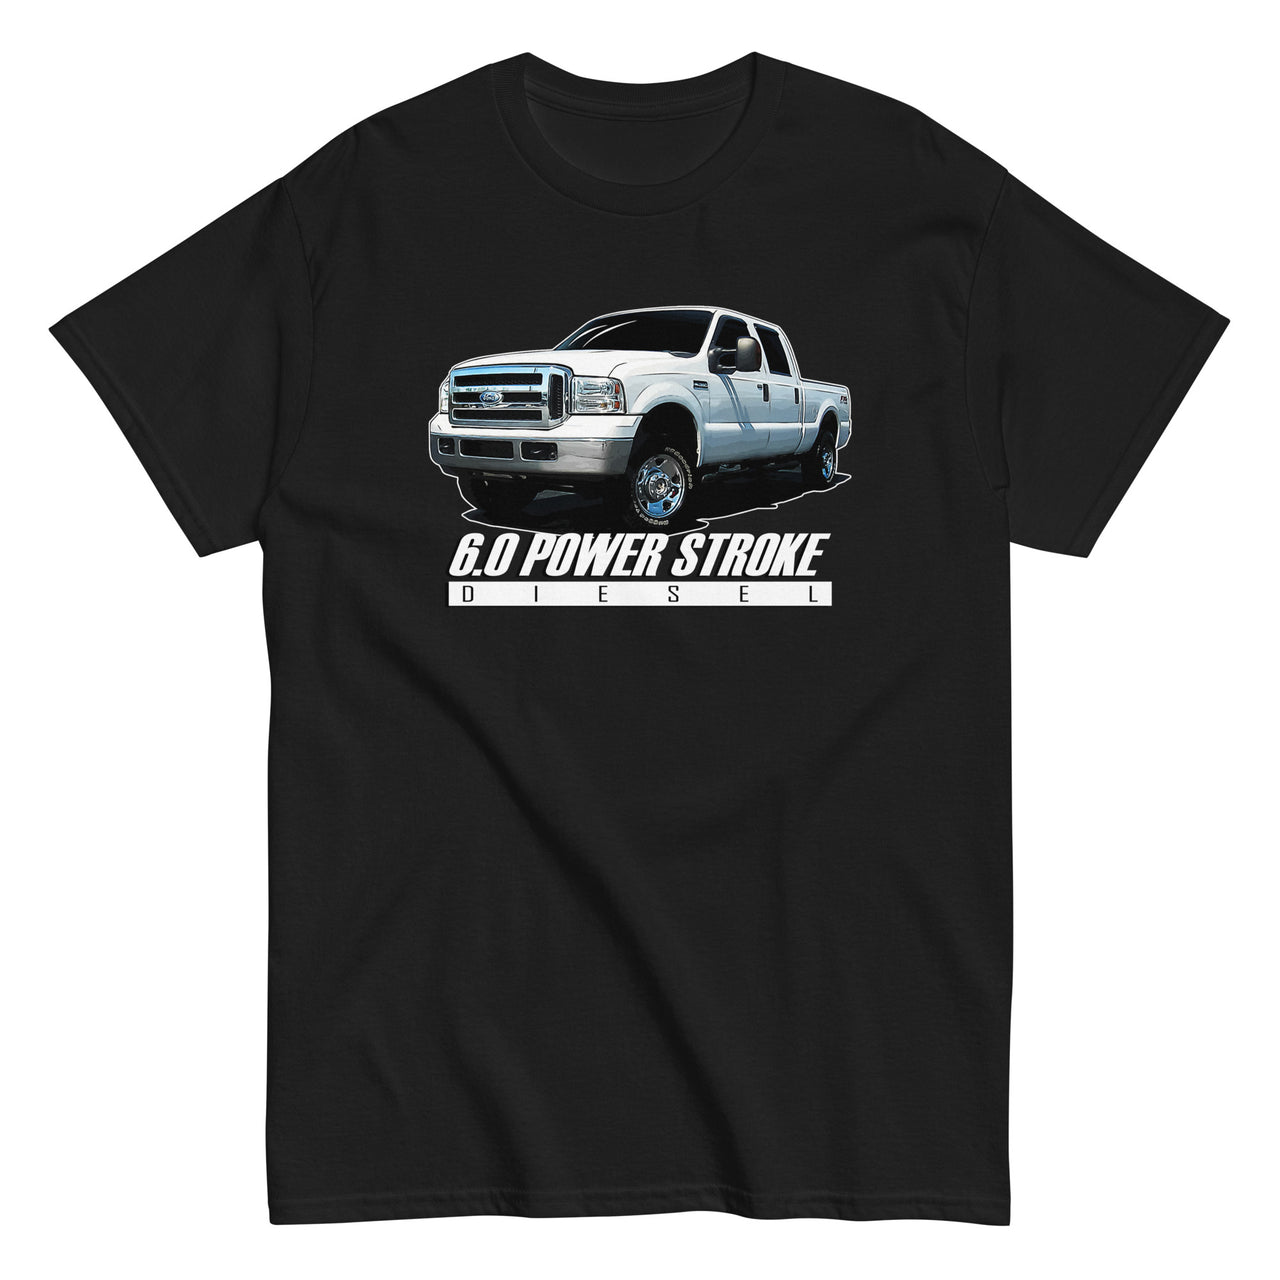 6.0 Power Stroke Diesel T-Shirt in black